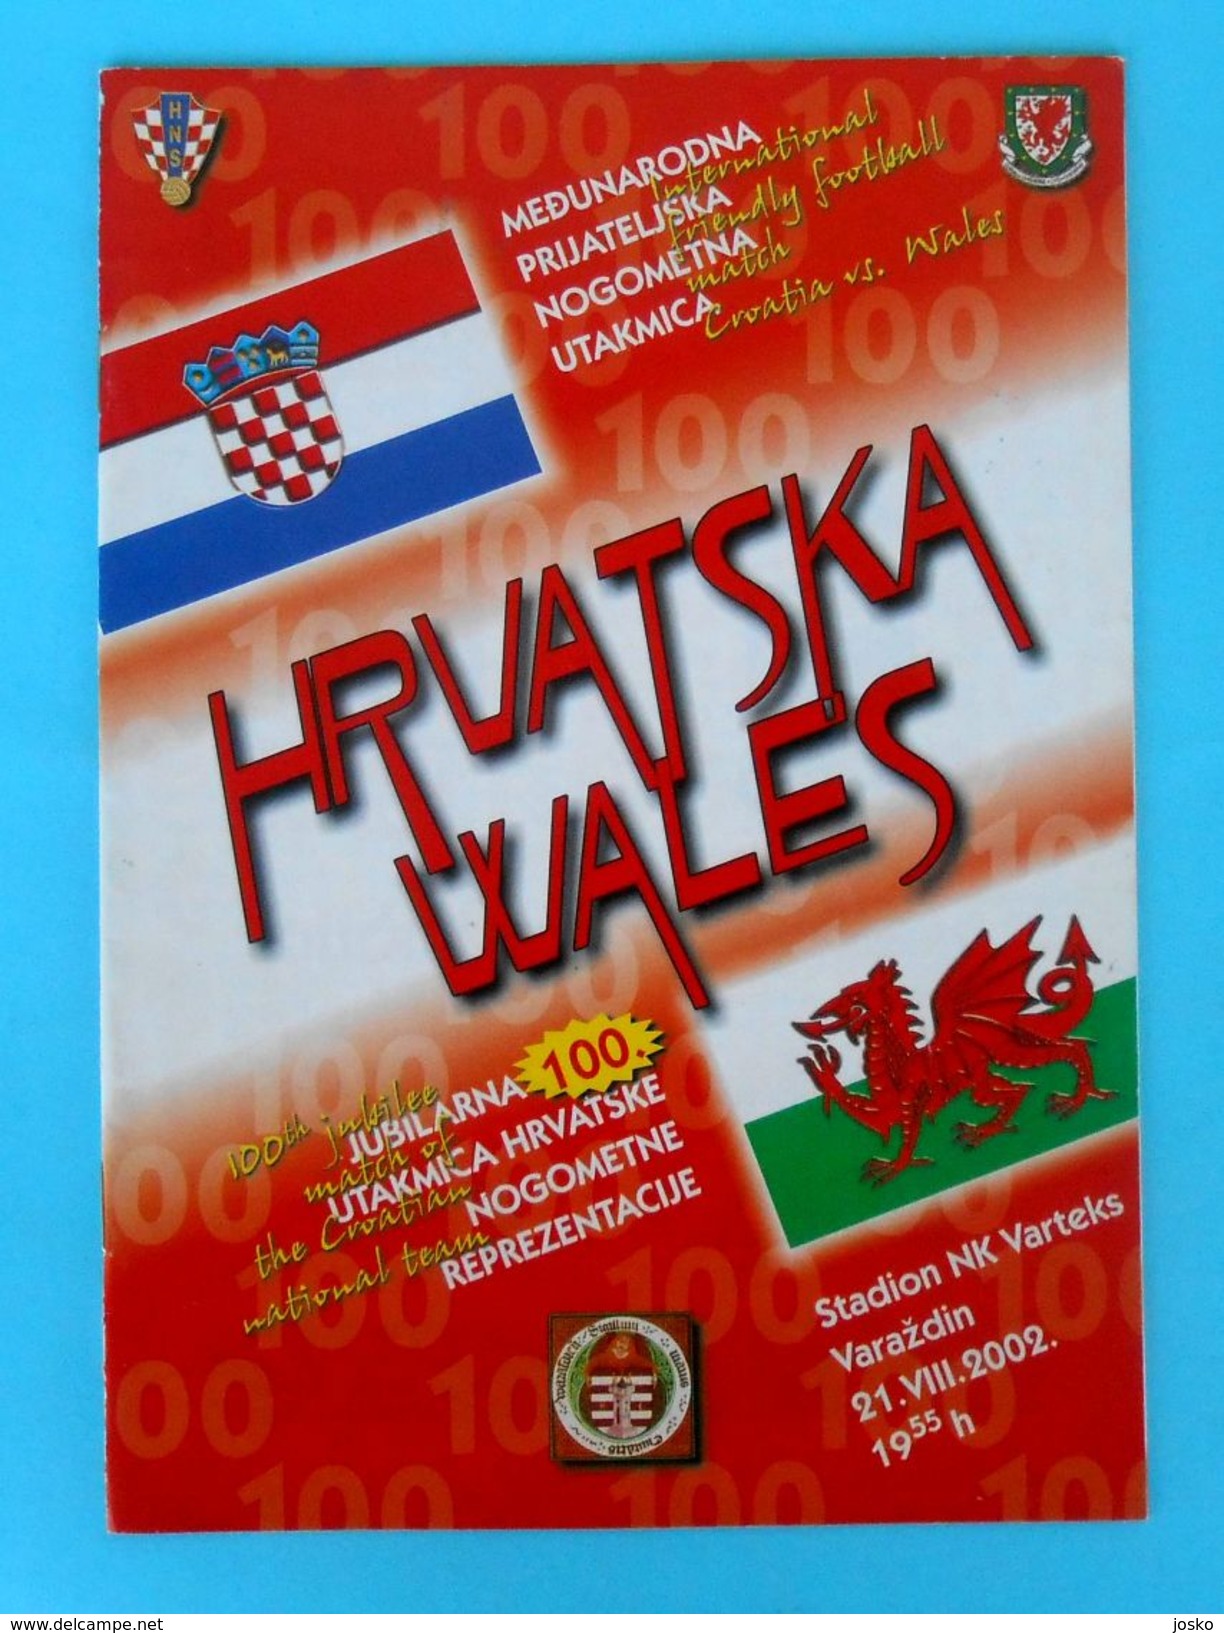 CROATIA V WALES - 2002 Intern. Football Match Programme * Soccer Fussball Programm Calcio Programma Foot - Books